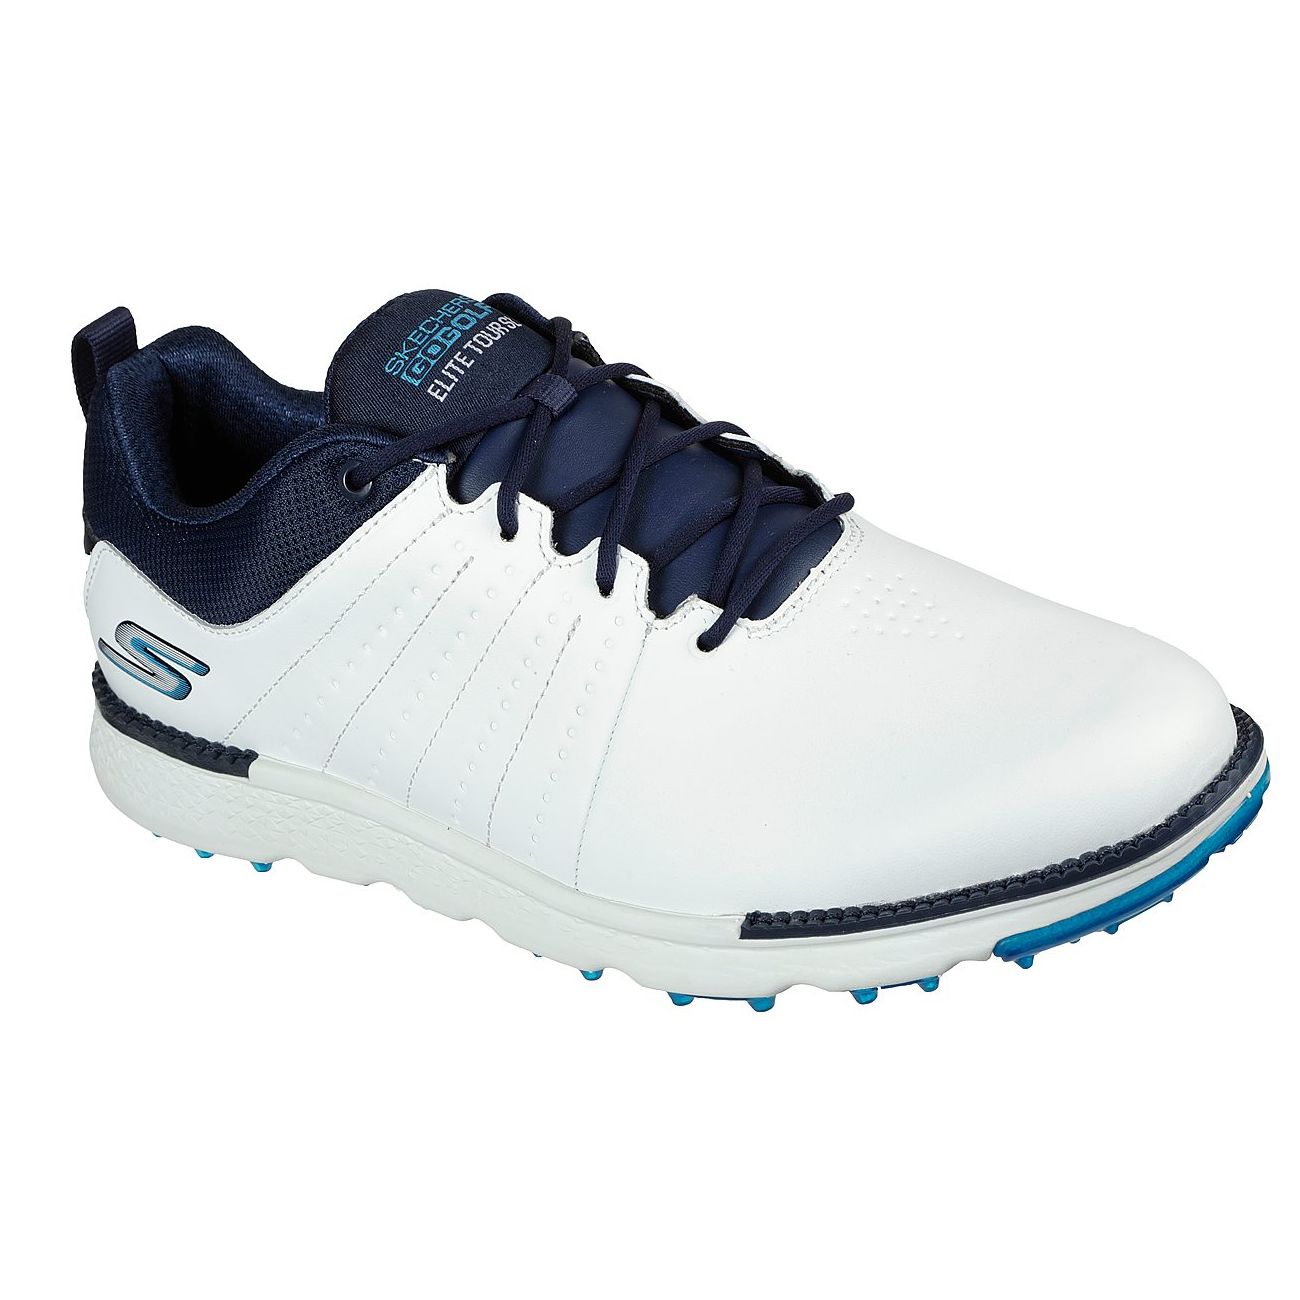 Skechers GO GOLF Elite Tour SL Golf Shoes White/Navy | Scottsdale Golf